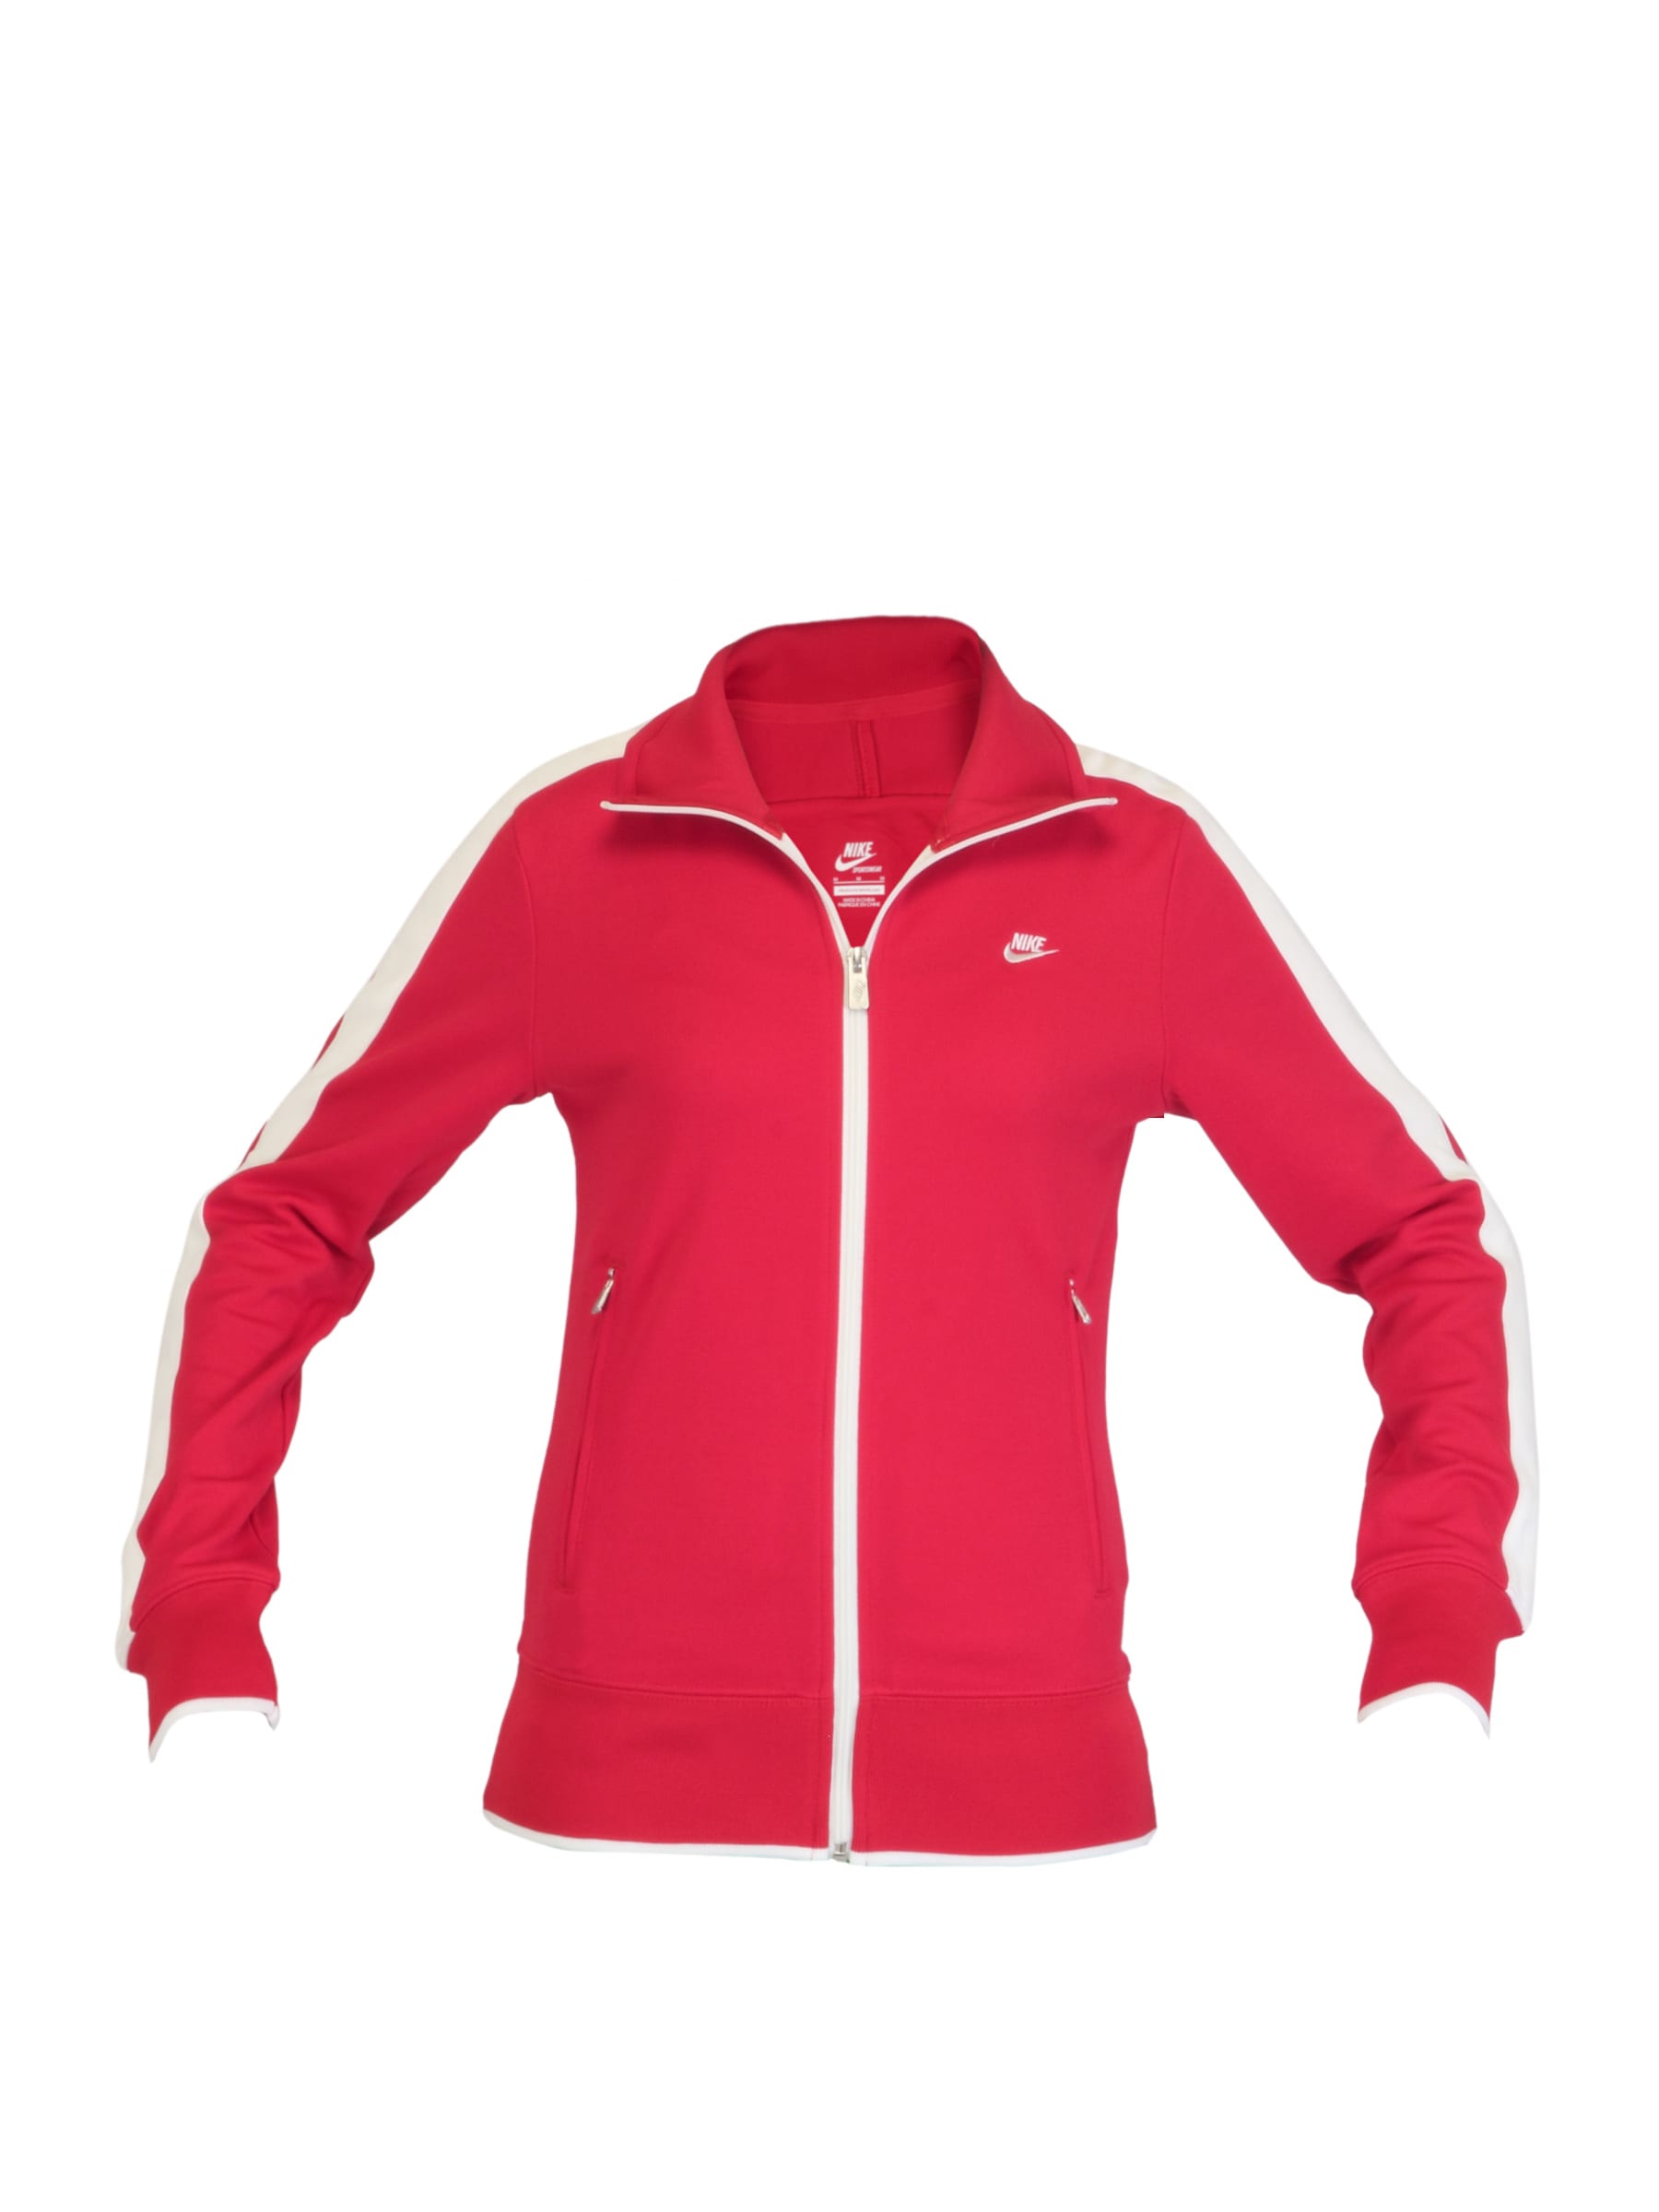 Nike Women Football Red Jacket